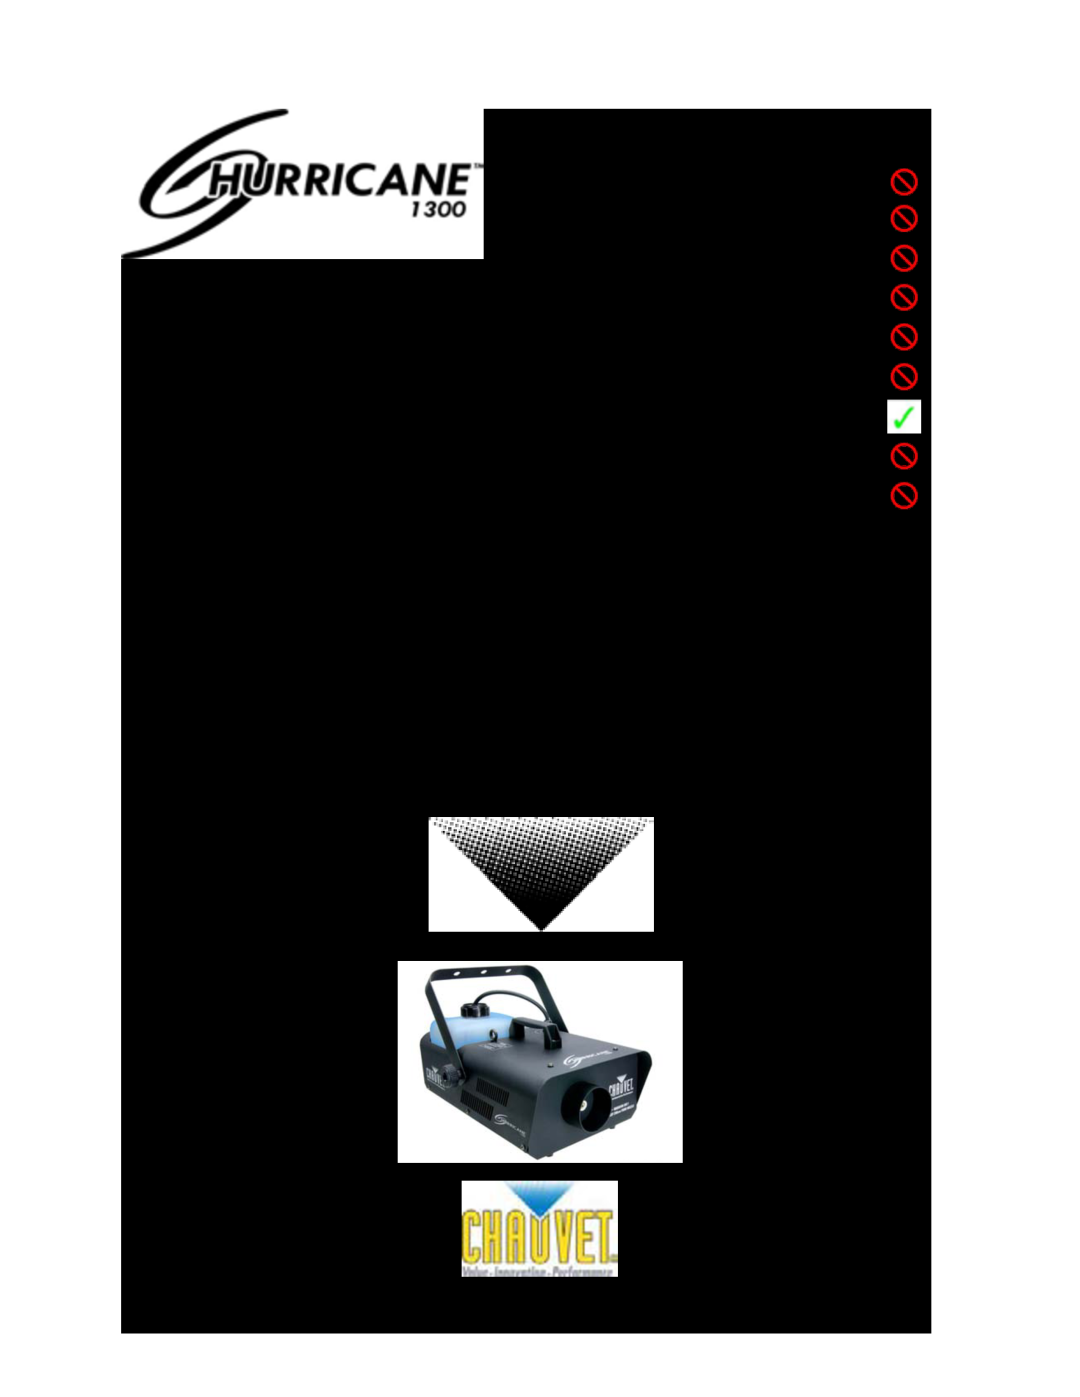 Chauvet Hurricane 1300 user manual Snapshot, User Manual, F-1300 